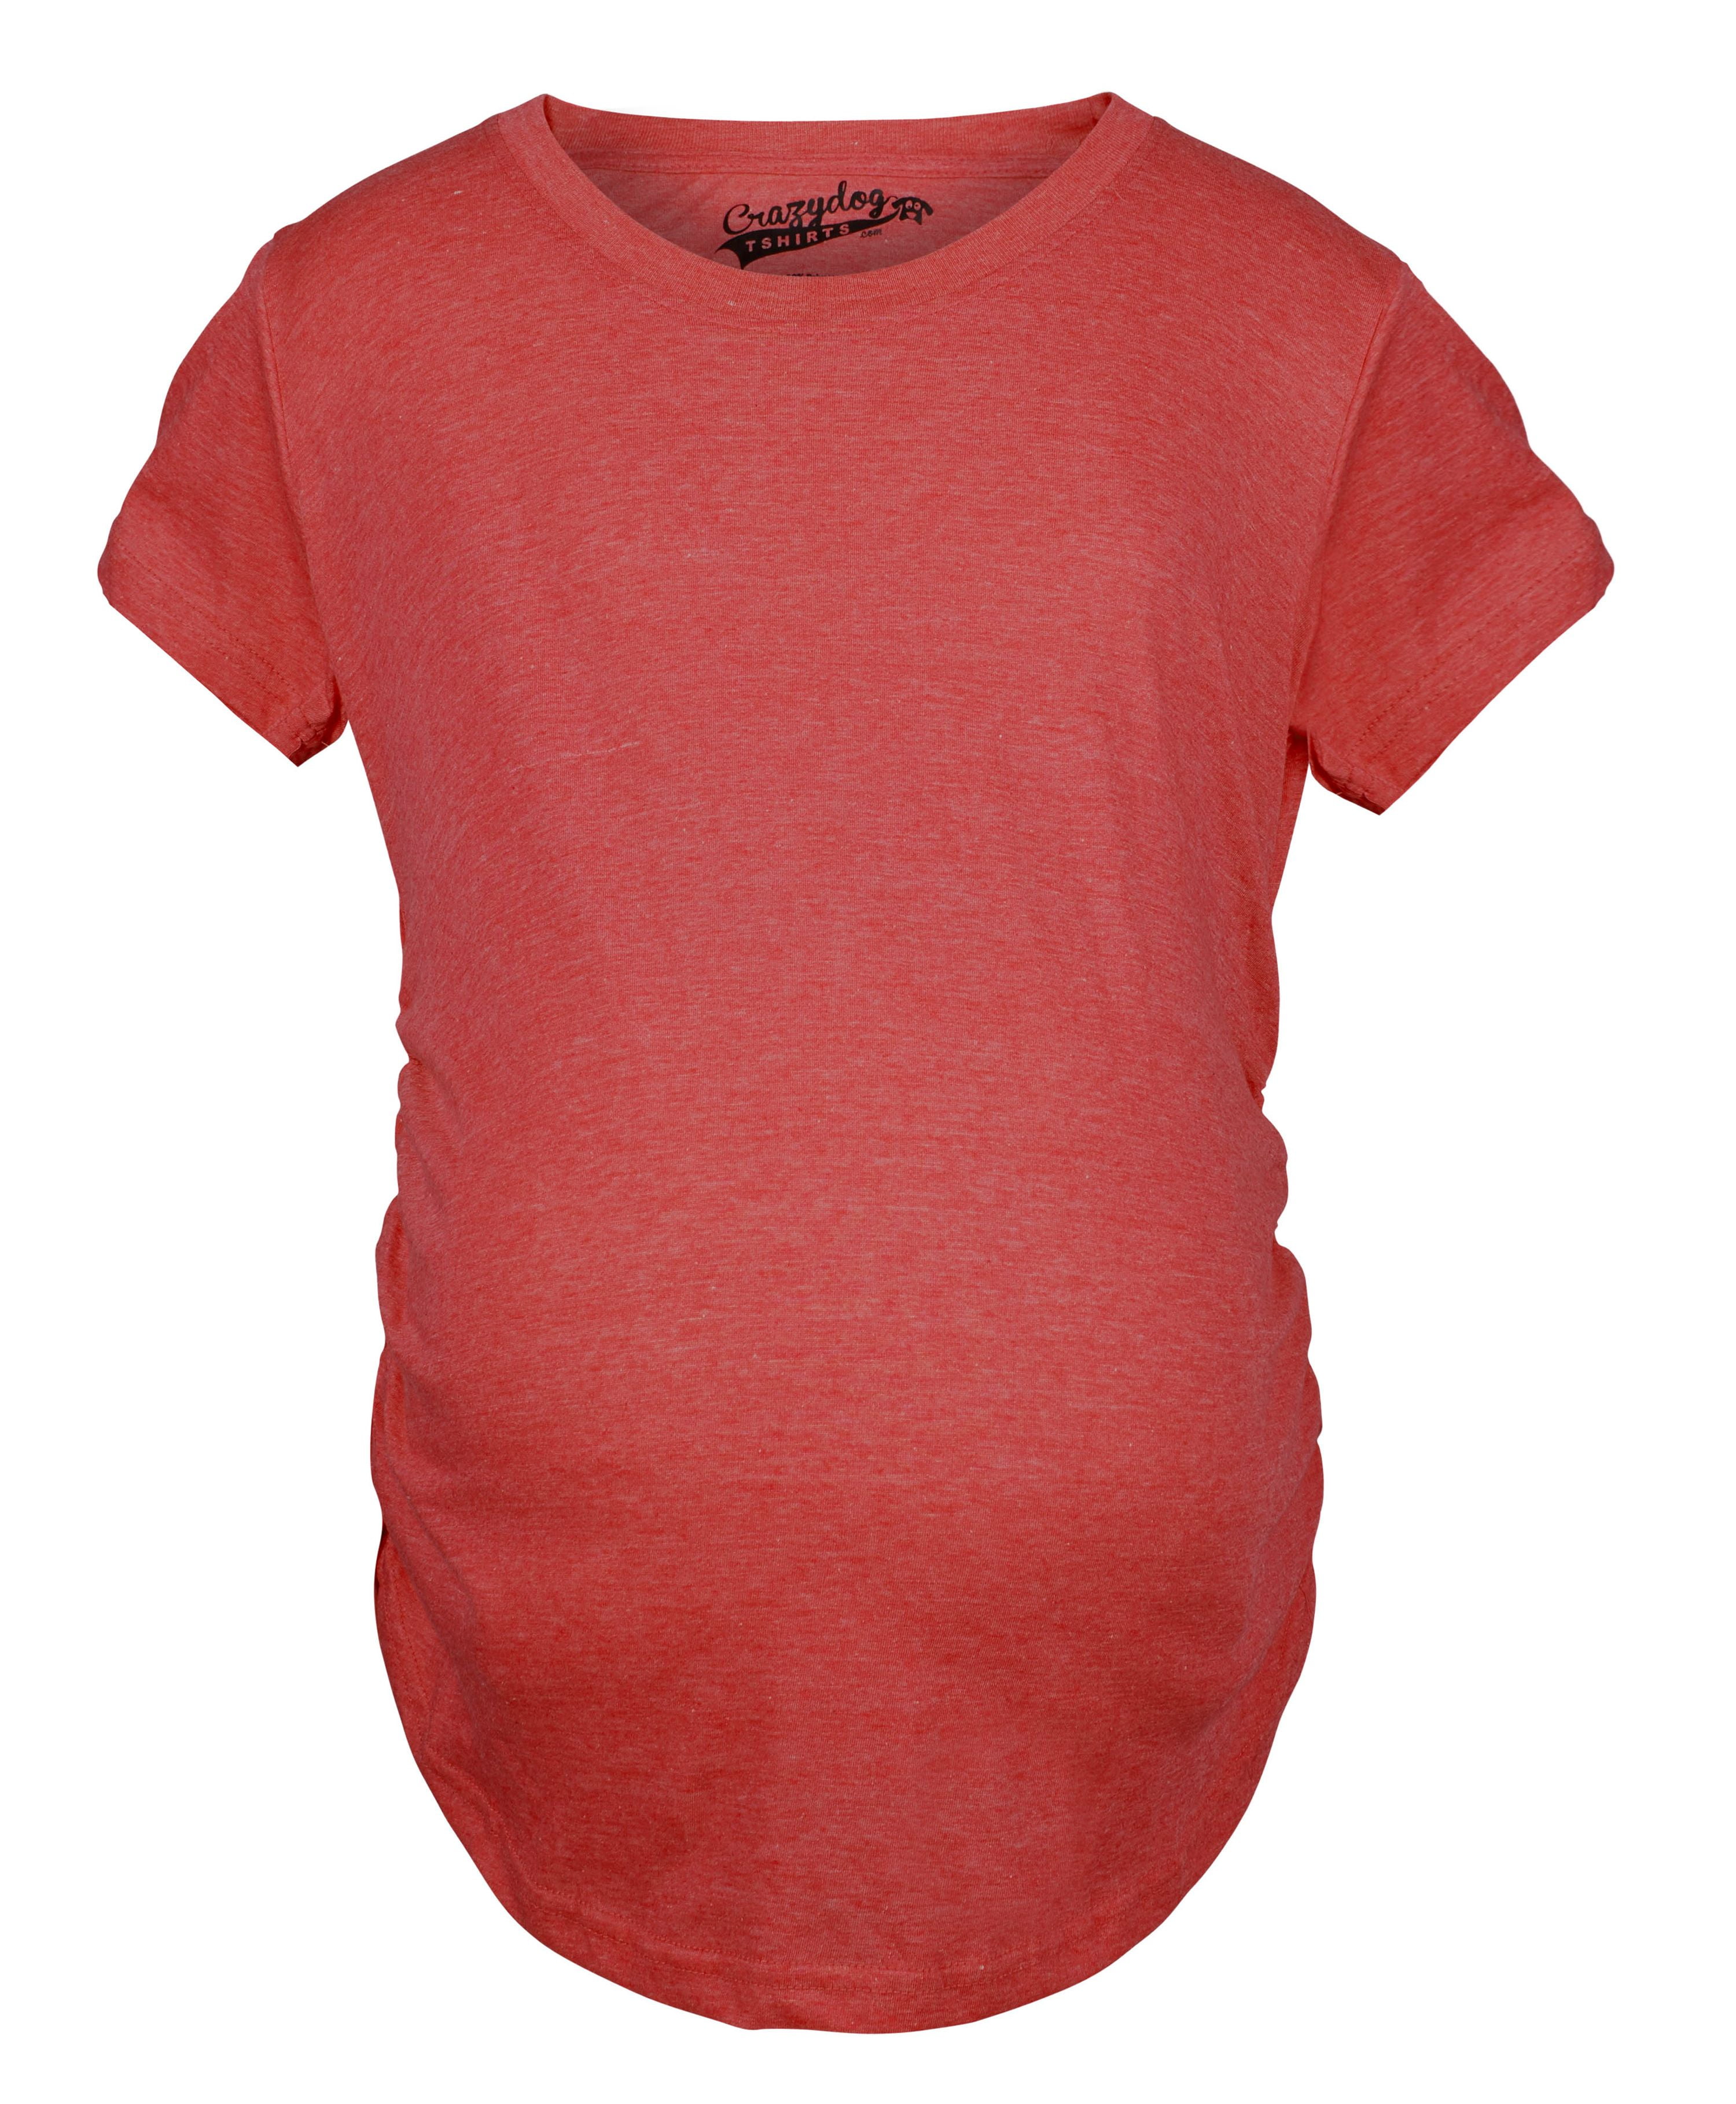 Womens Maternity Shirt Comfortable Pregnancy Tee Plain Blank Im Pregnant Top 